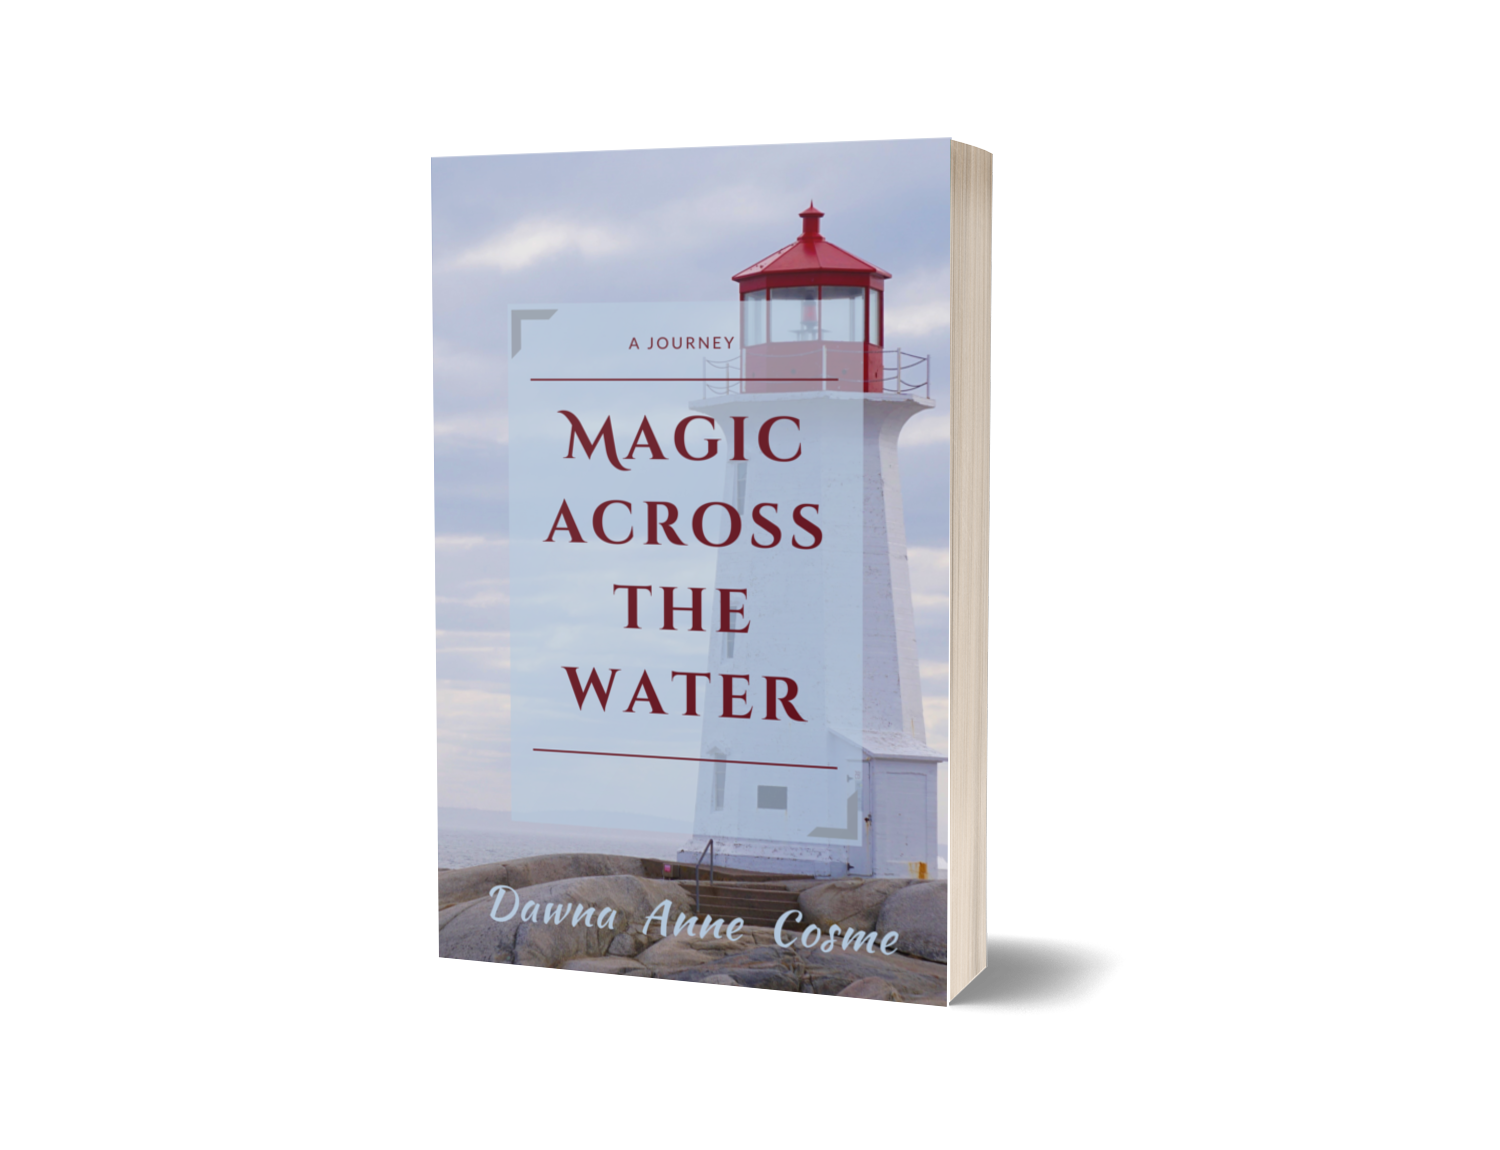 MAGIC ACROSS THE WATER